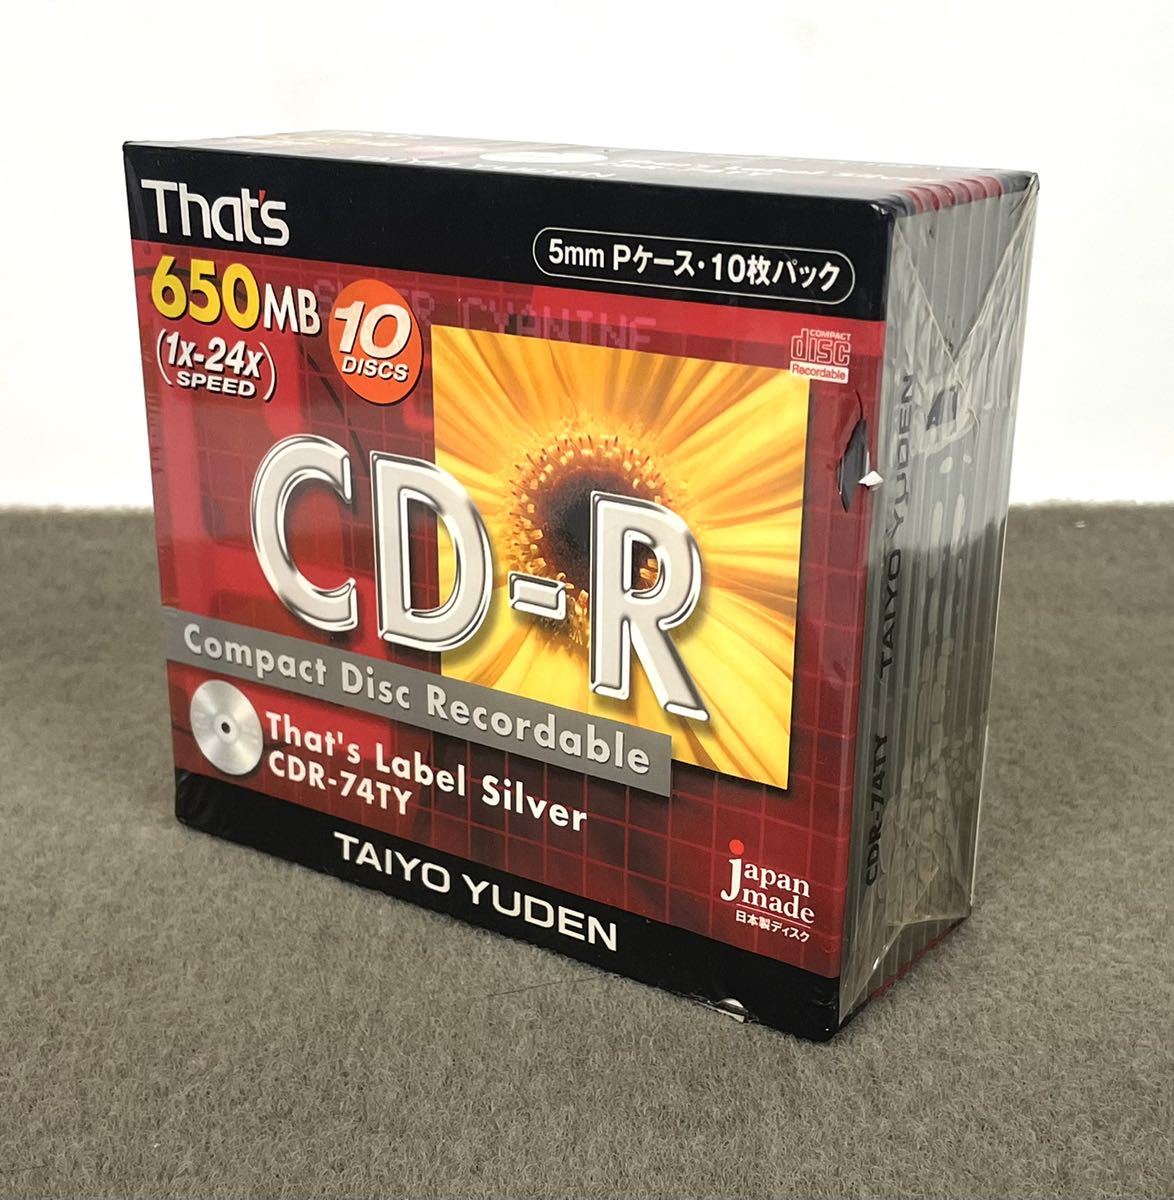 品 that's ザッツ CD-R 10 DISCS CDR-74TY MADE IN JAPAN TAIYO YUDEN 太陽誘電(CD-R、CD- RW)｜売買されたオークション情報、yahooの商品情報をアーカイブ公開 - オークファン（aucfan.com）